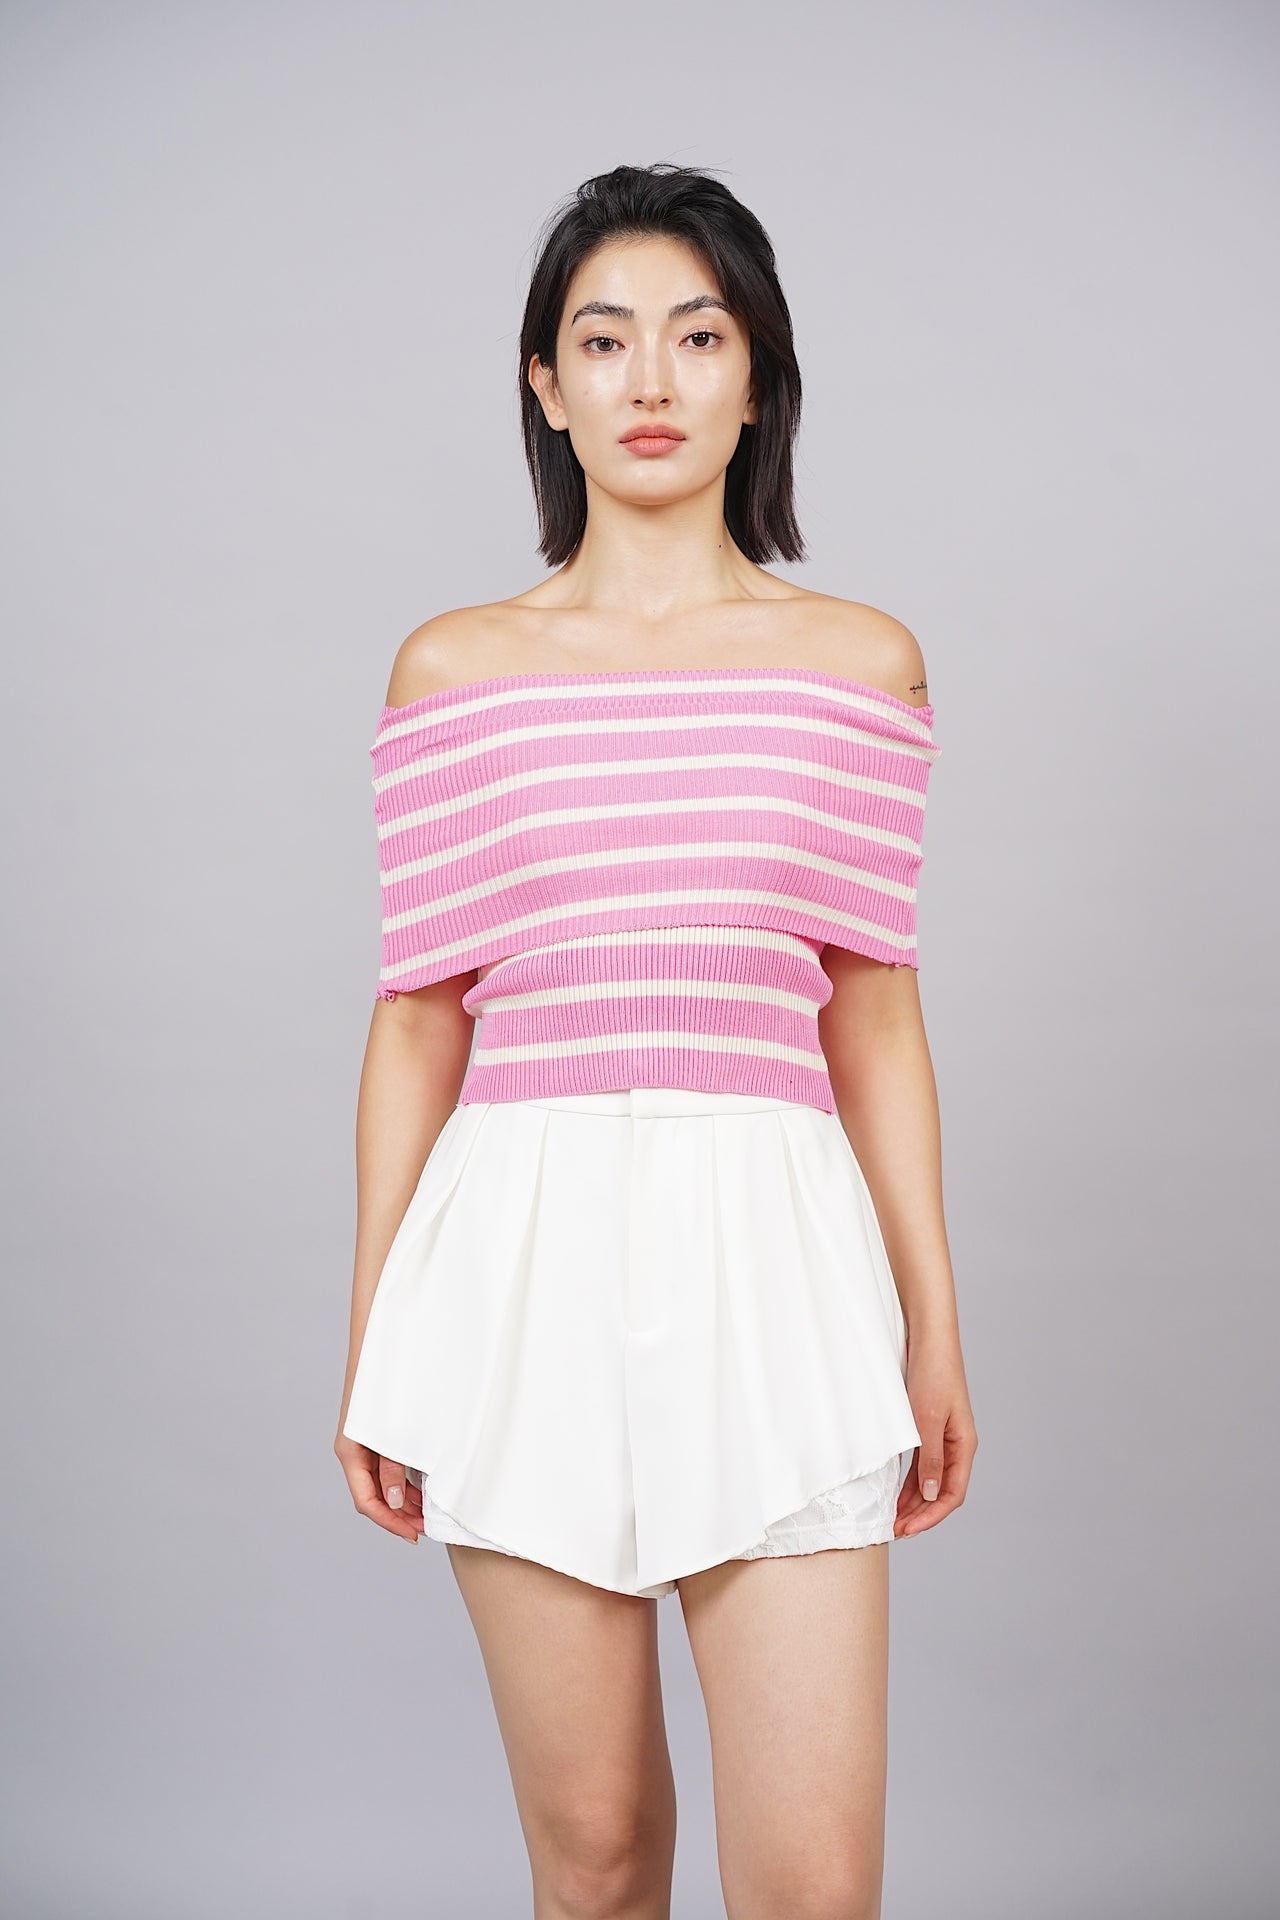 EVERYDAY / Tessa Off-Shoulder Top in Pink Stripes